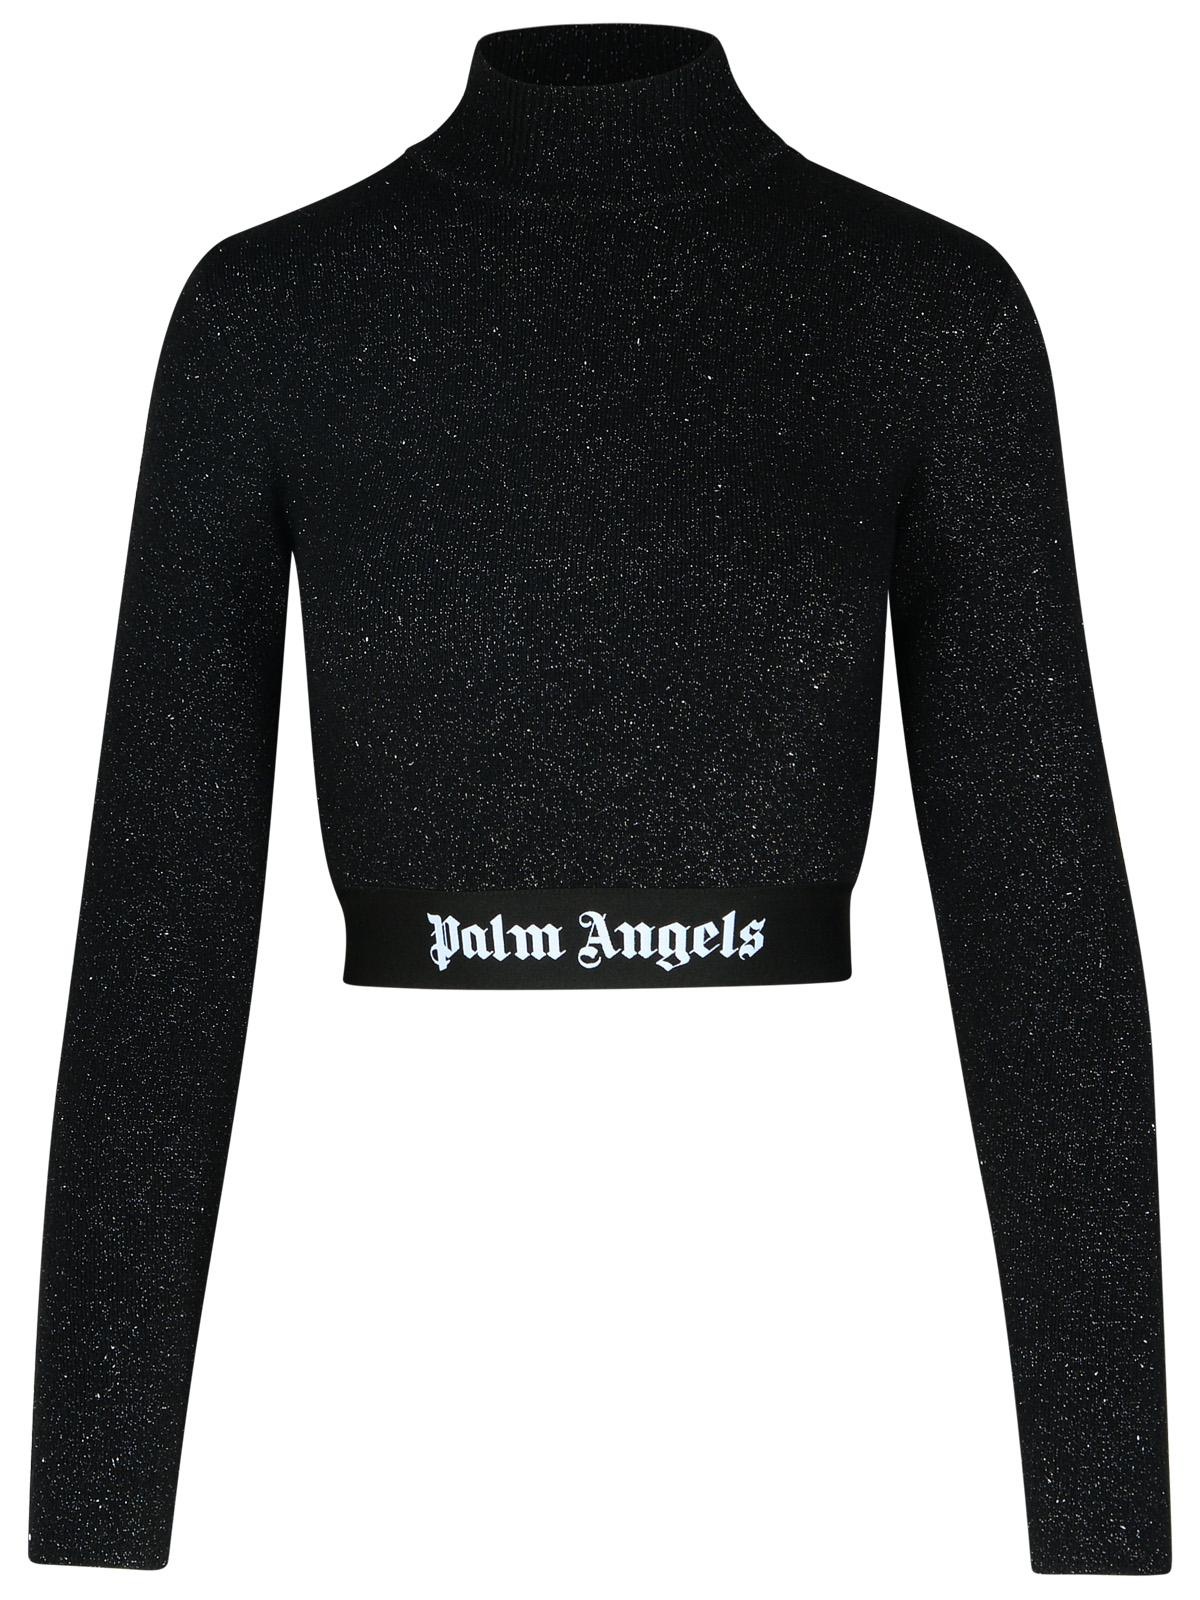 Palm Angels Crop Top In Black Viscose Blend Woman - 1